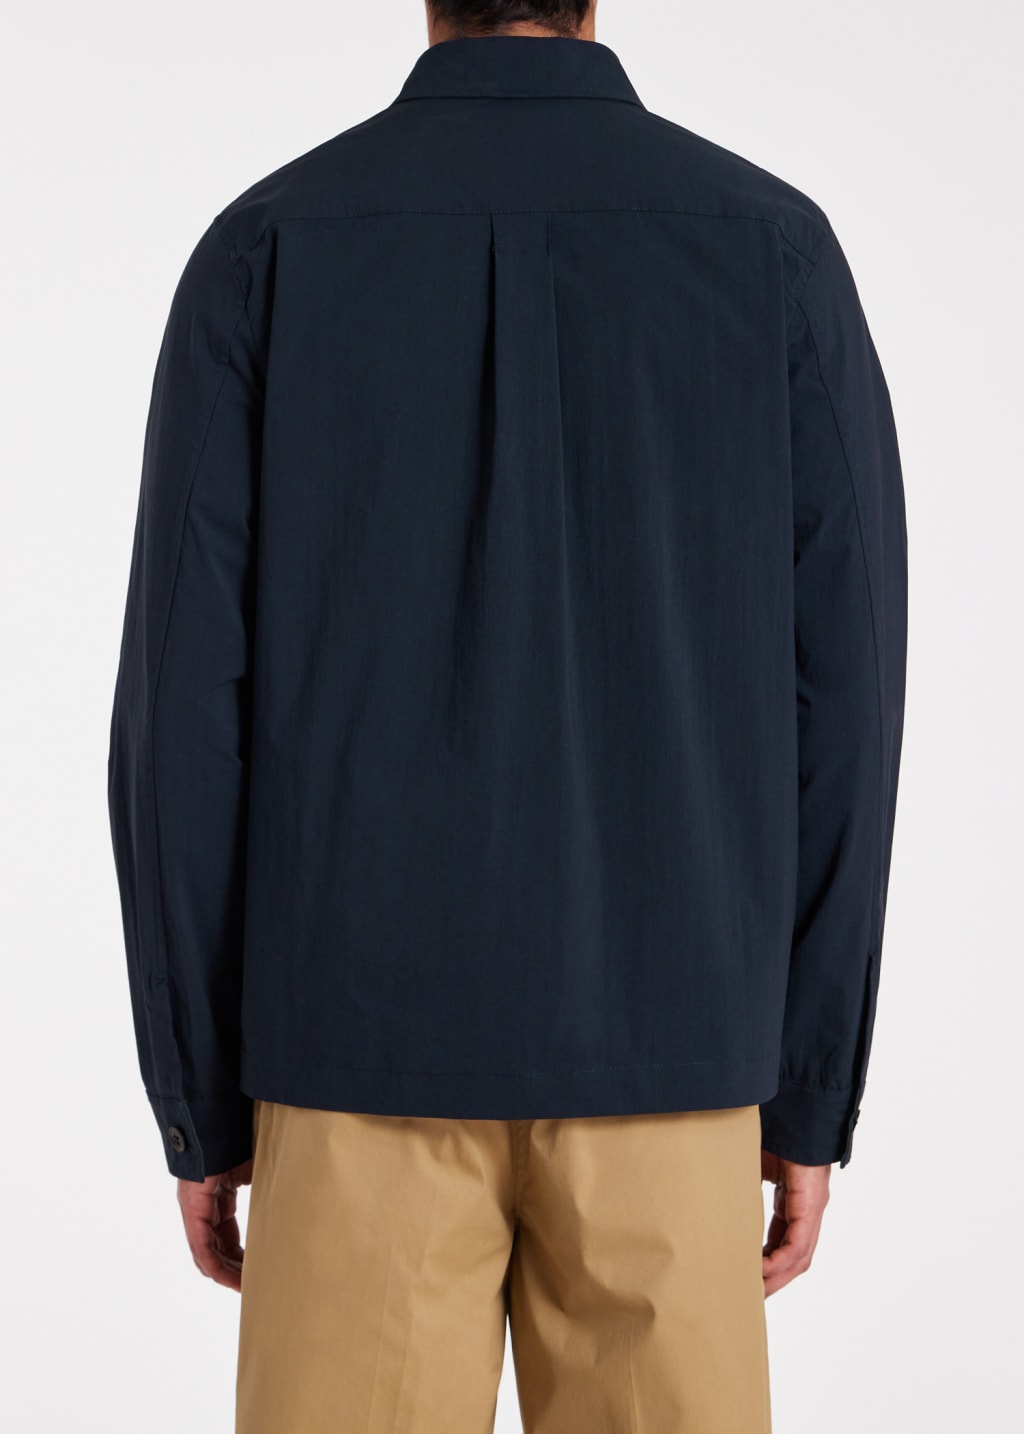 Men's Navy Cotton-Nylon Zip Overshirt